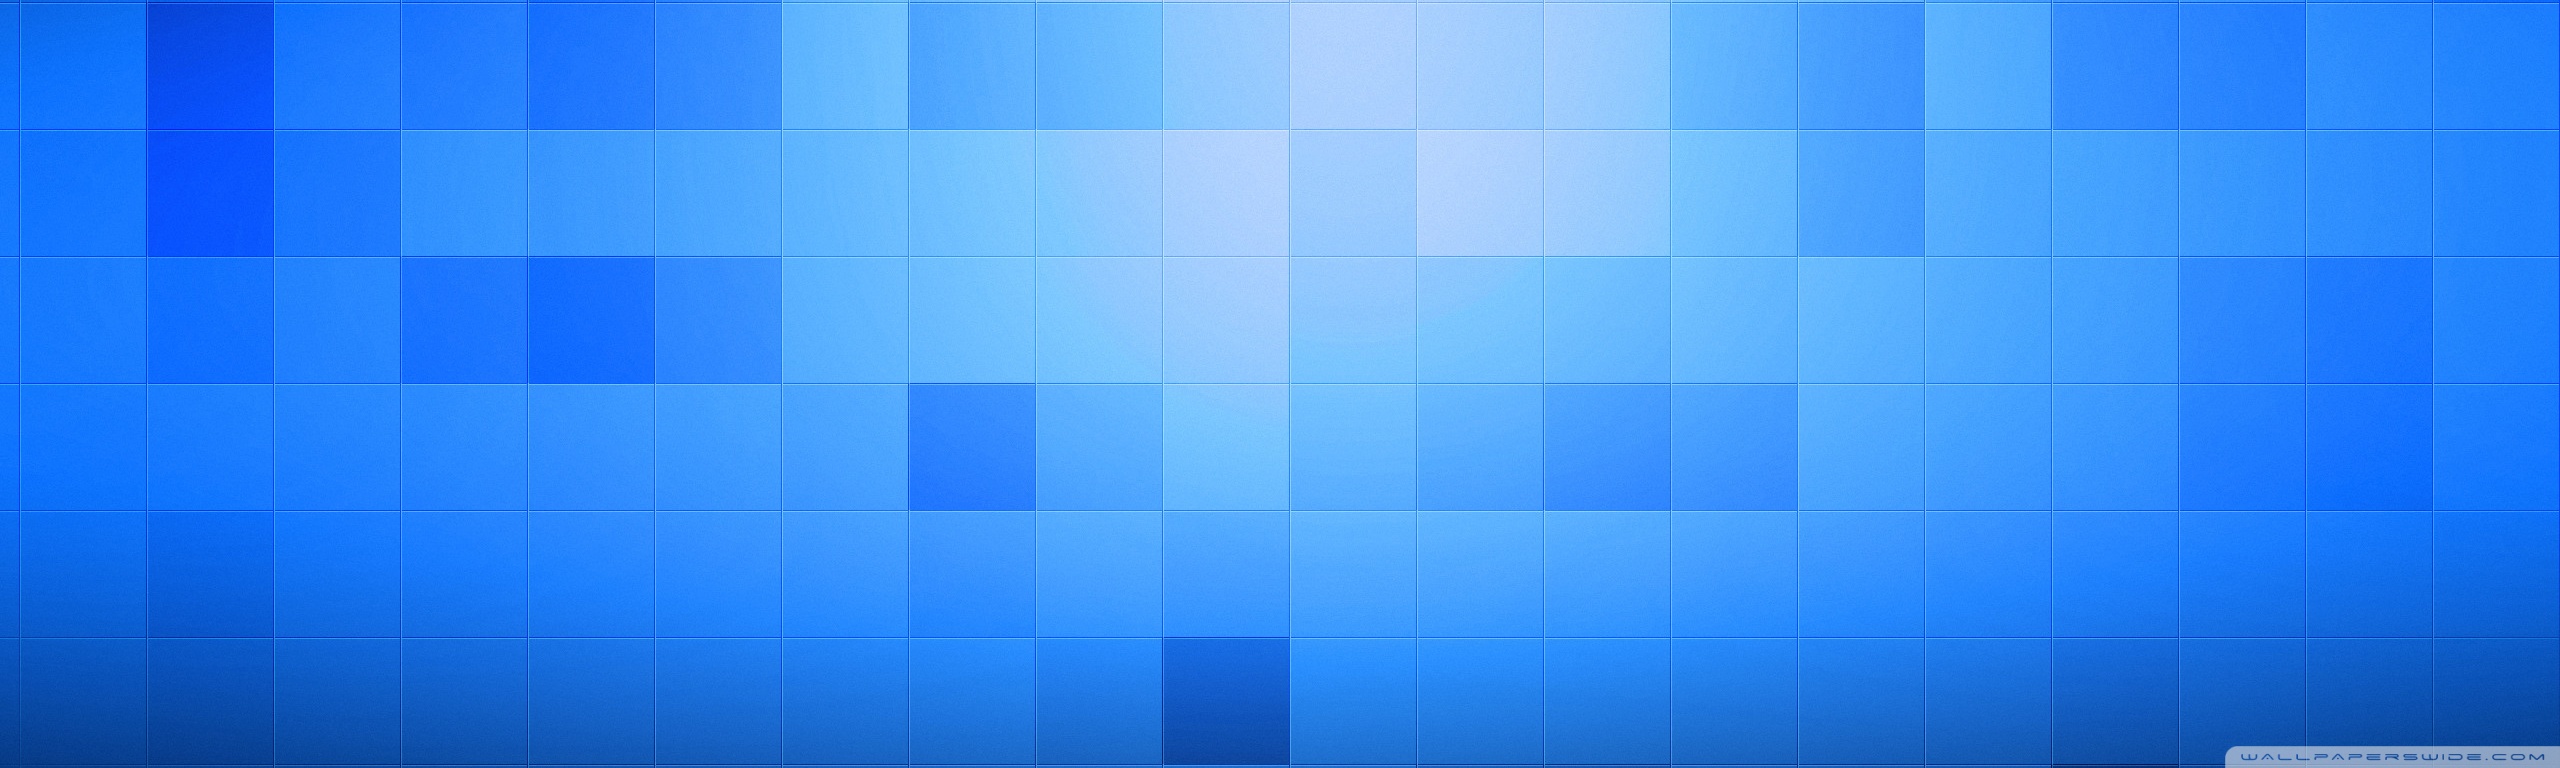 Blue Pixel Ultra Hd Desktop Background Wallpaper For 4k Uhd Tv